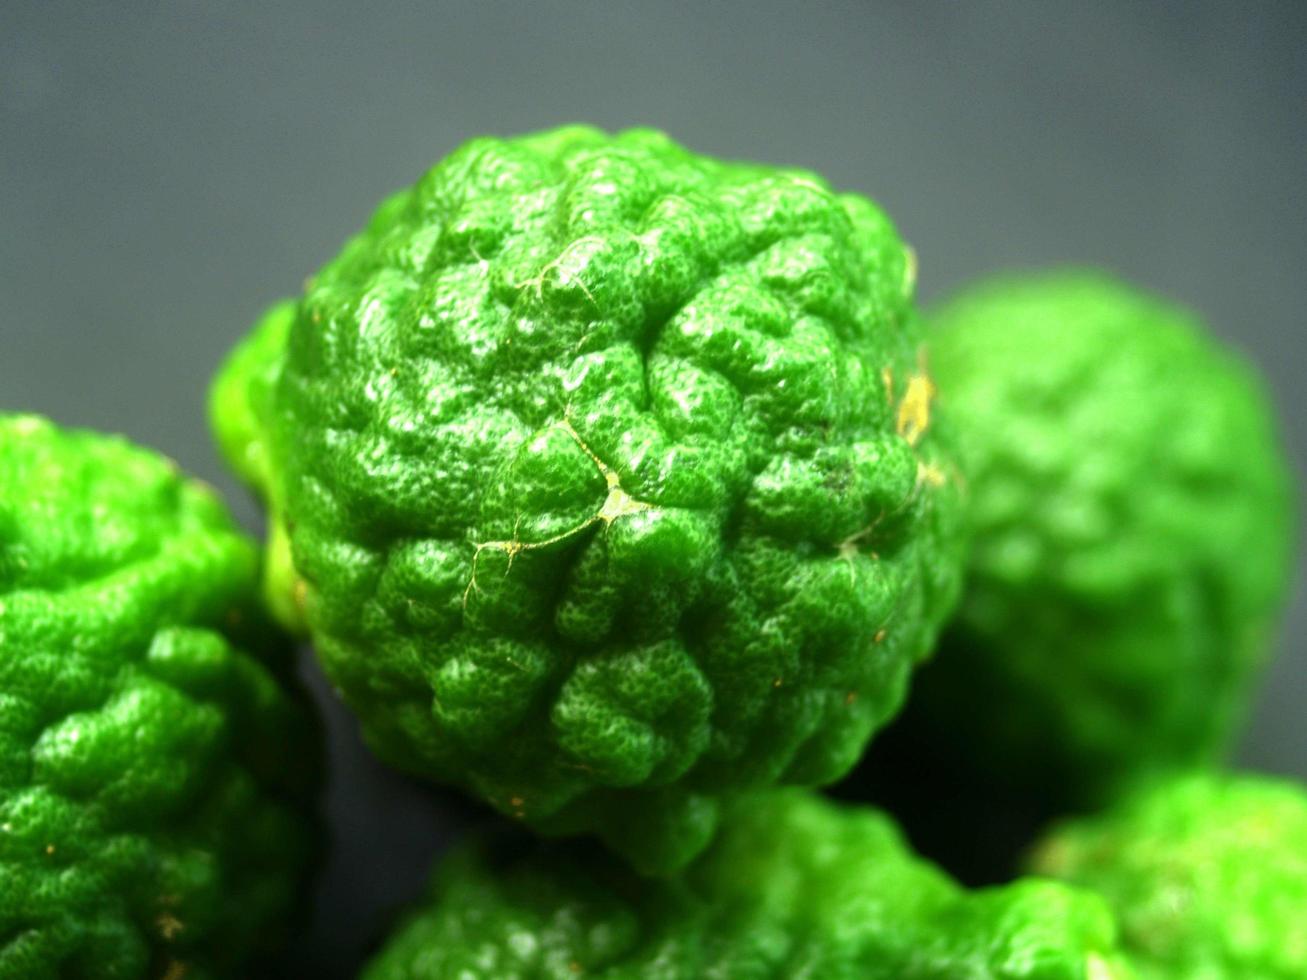 Bergamot Green Fruit photo